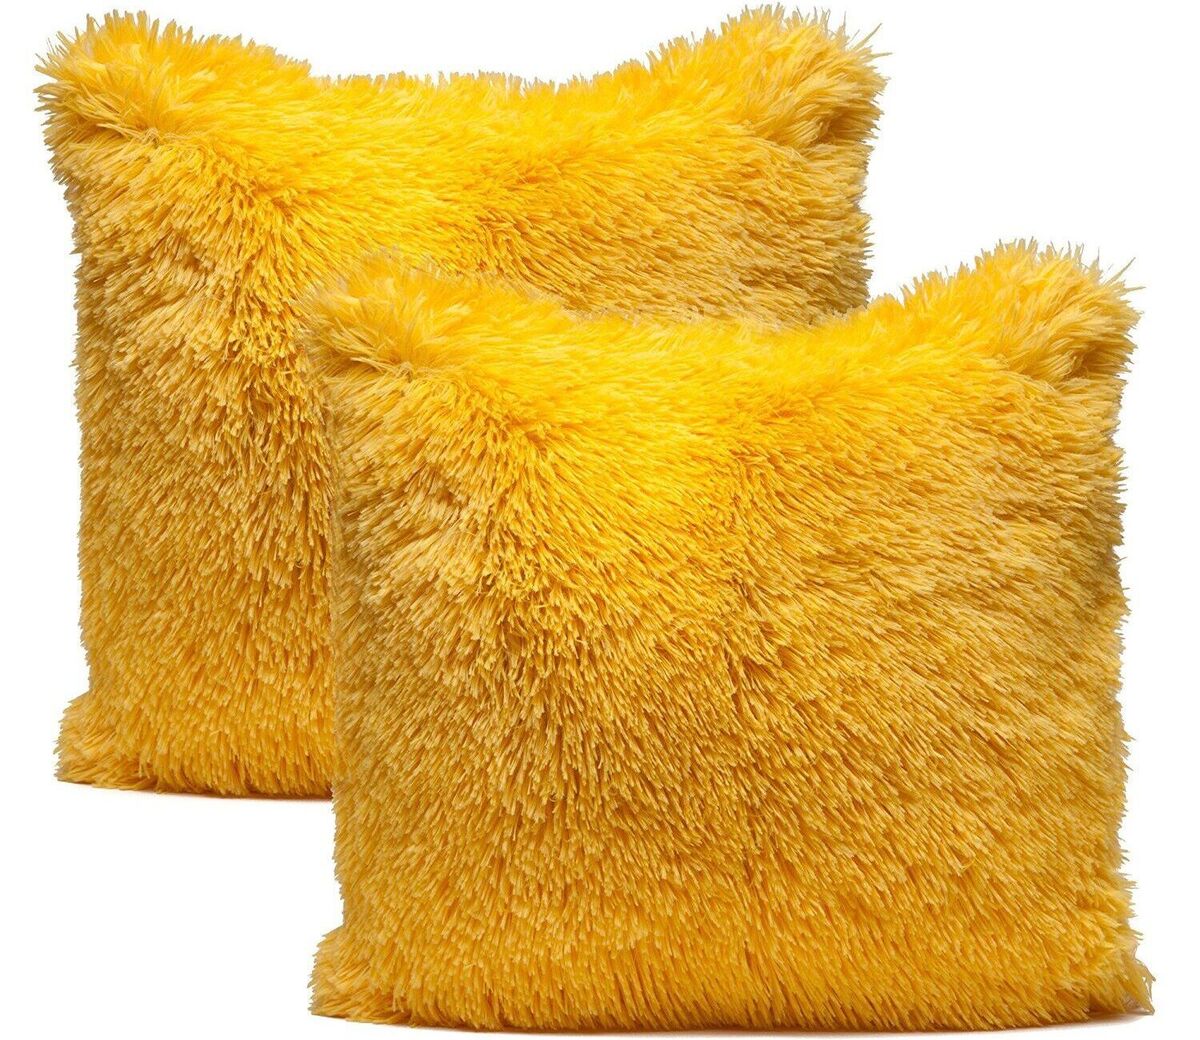 9 Incredible Yellow Pillows for 2023